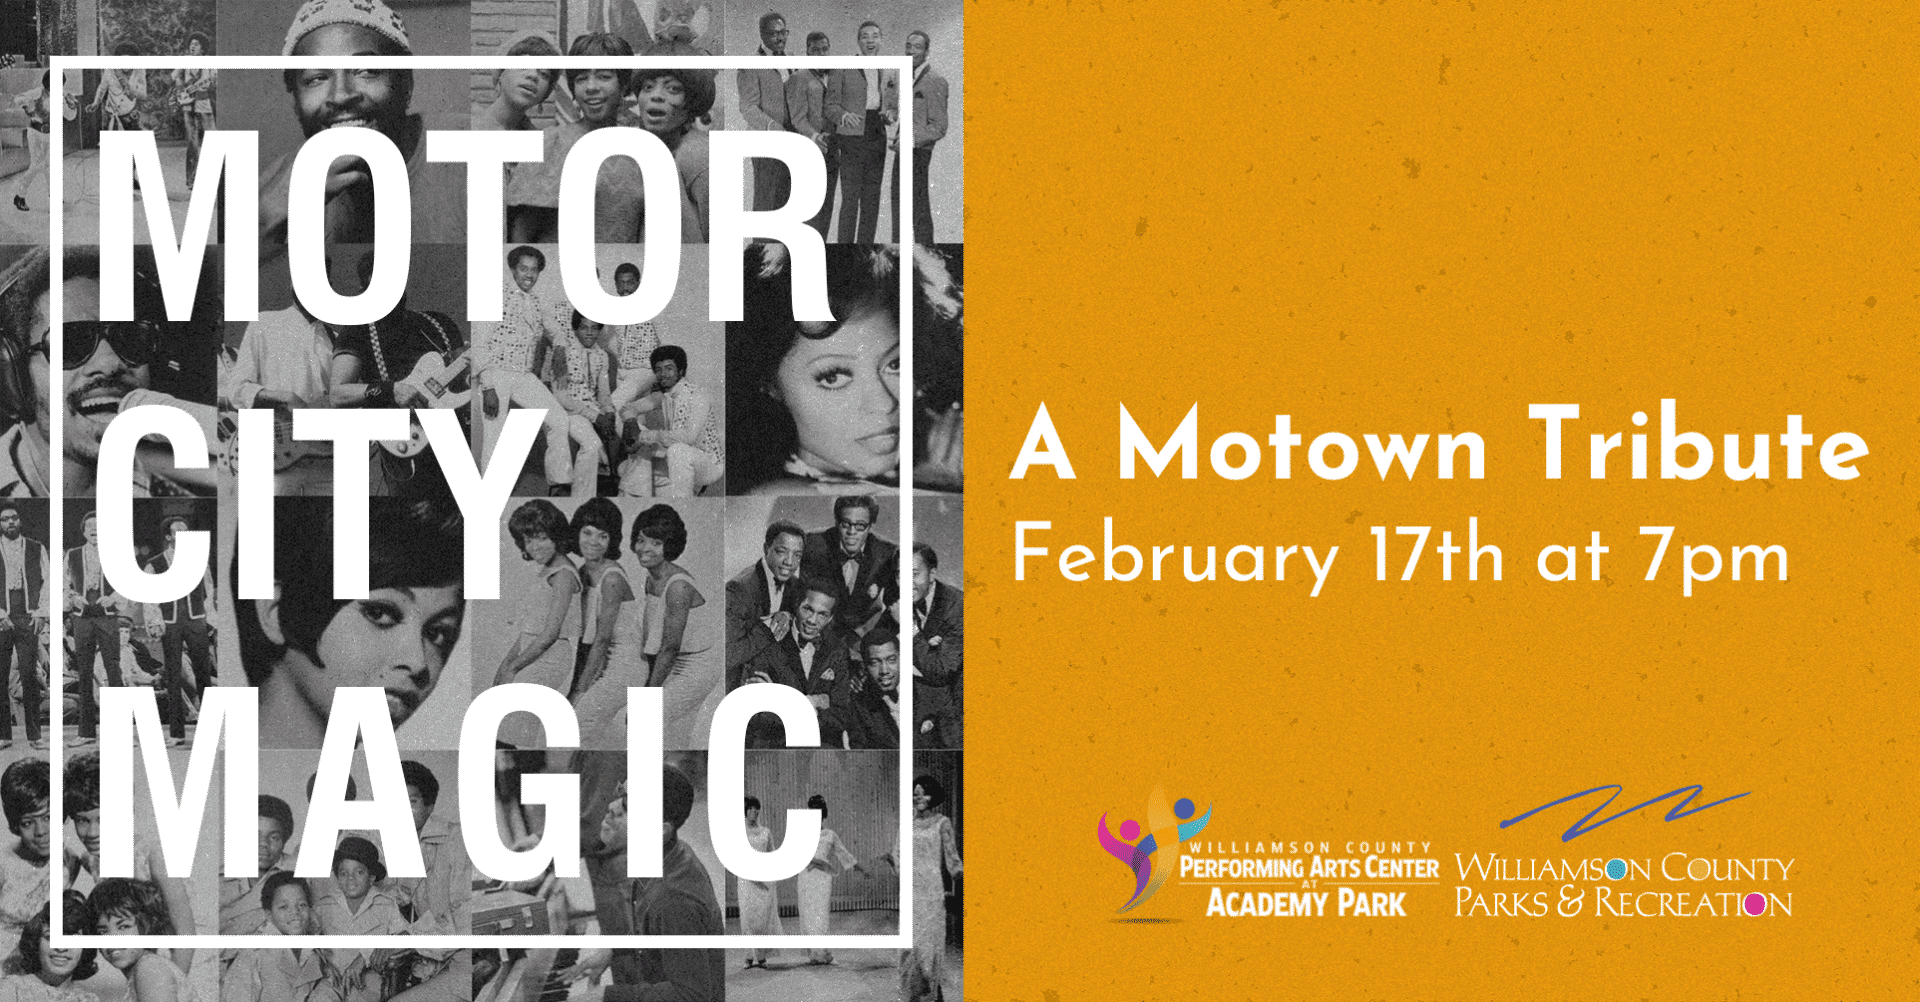 Motor City Magic, A Motown Tribute in Franklin, TN.